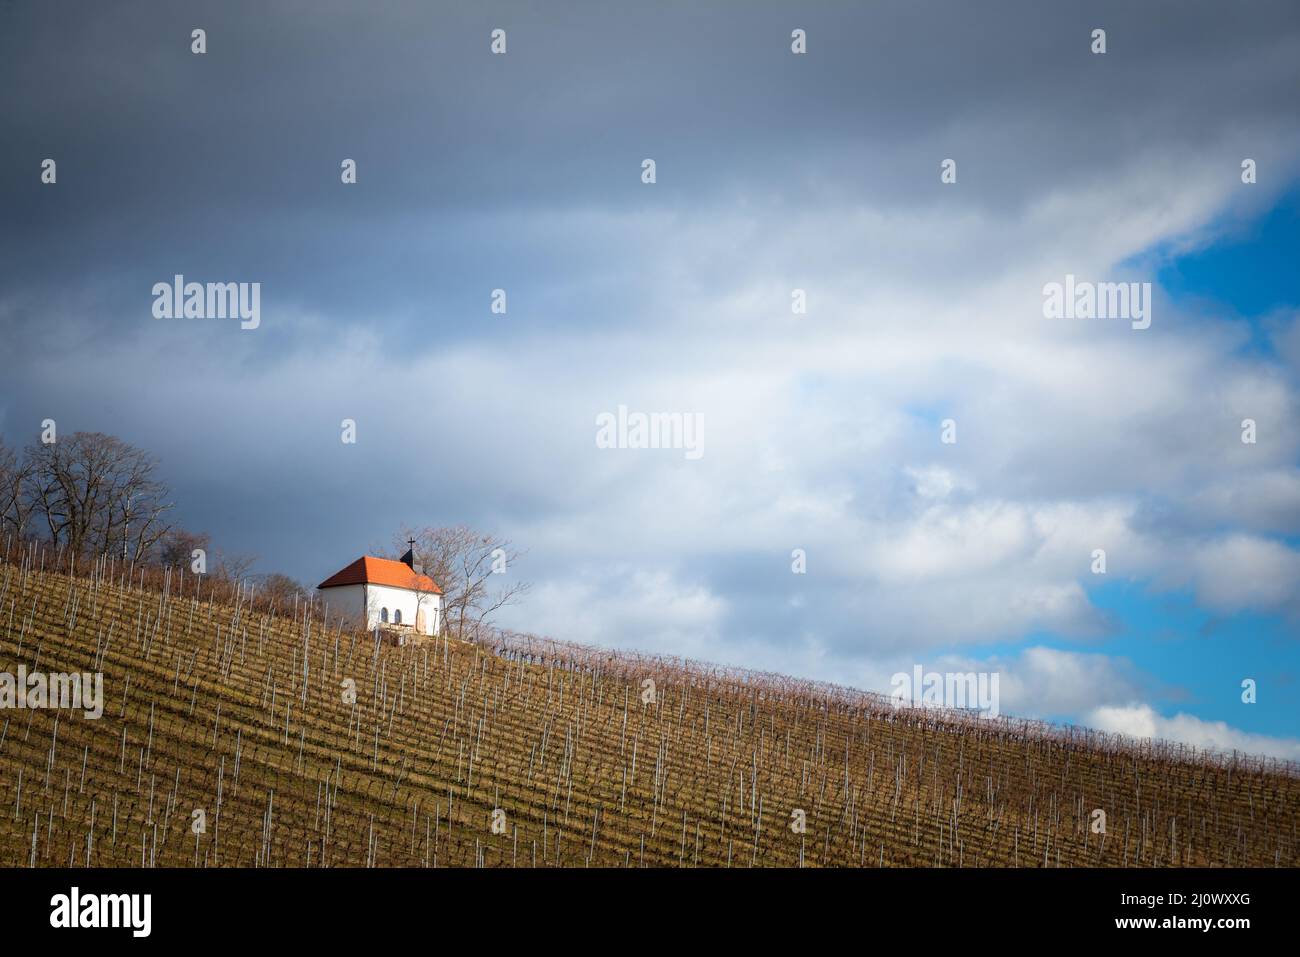 Autumnal vineyards, wine garden chapel in Neckenmarkt, Oberpullendorf District, Burgenland, Austria Stock Photo